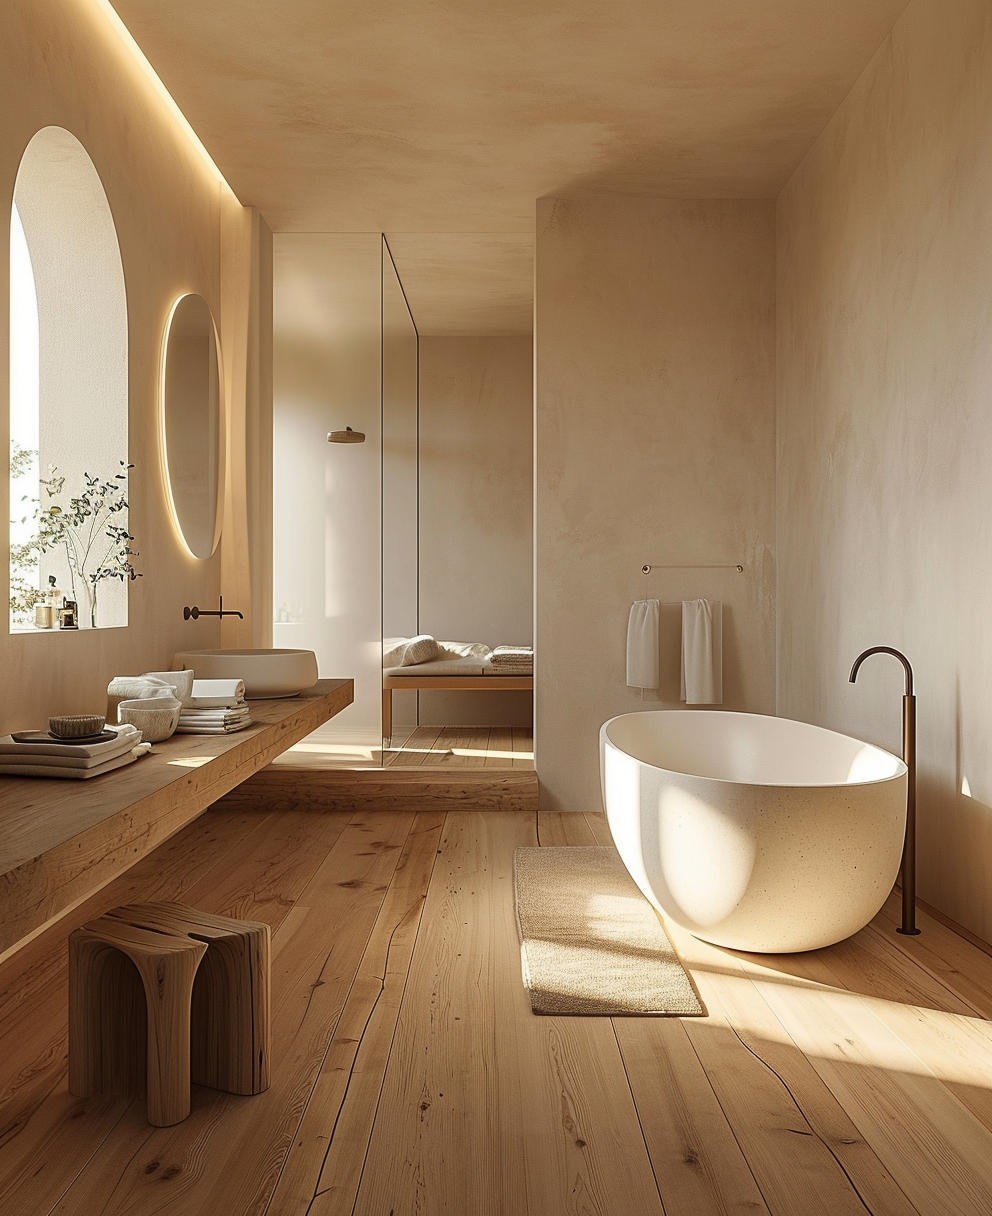 Bathroom Designs : Top Trending Bathroom Designs for Your Home Makeover